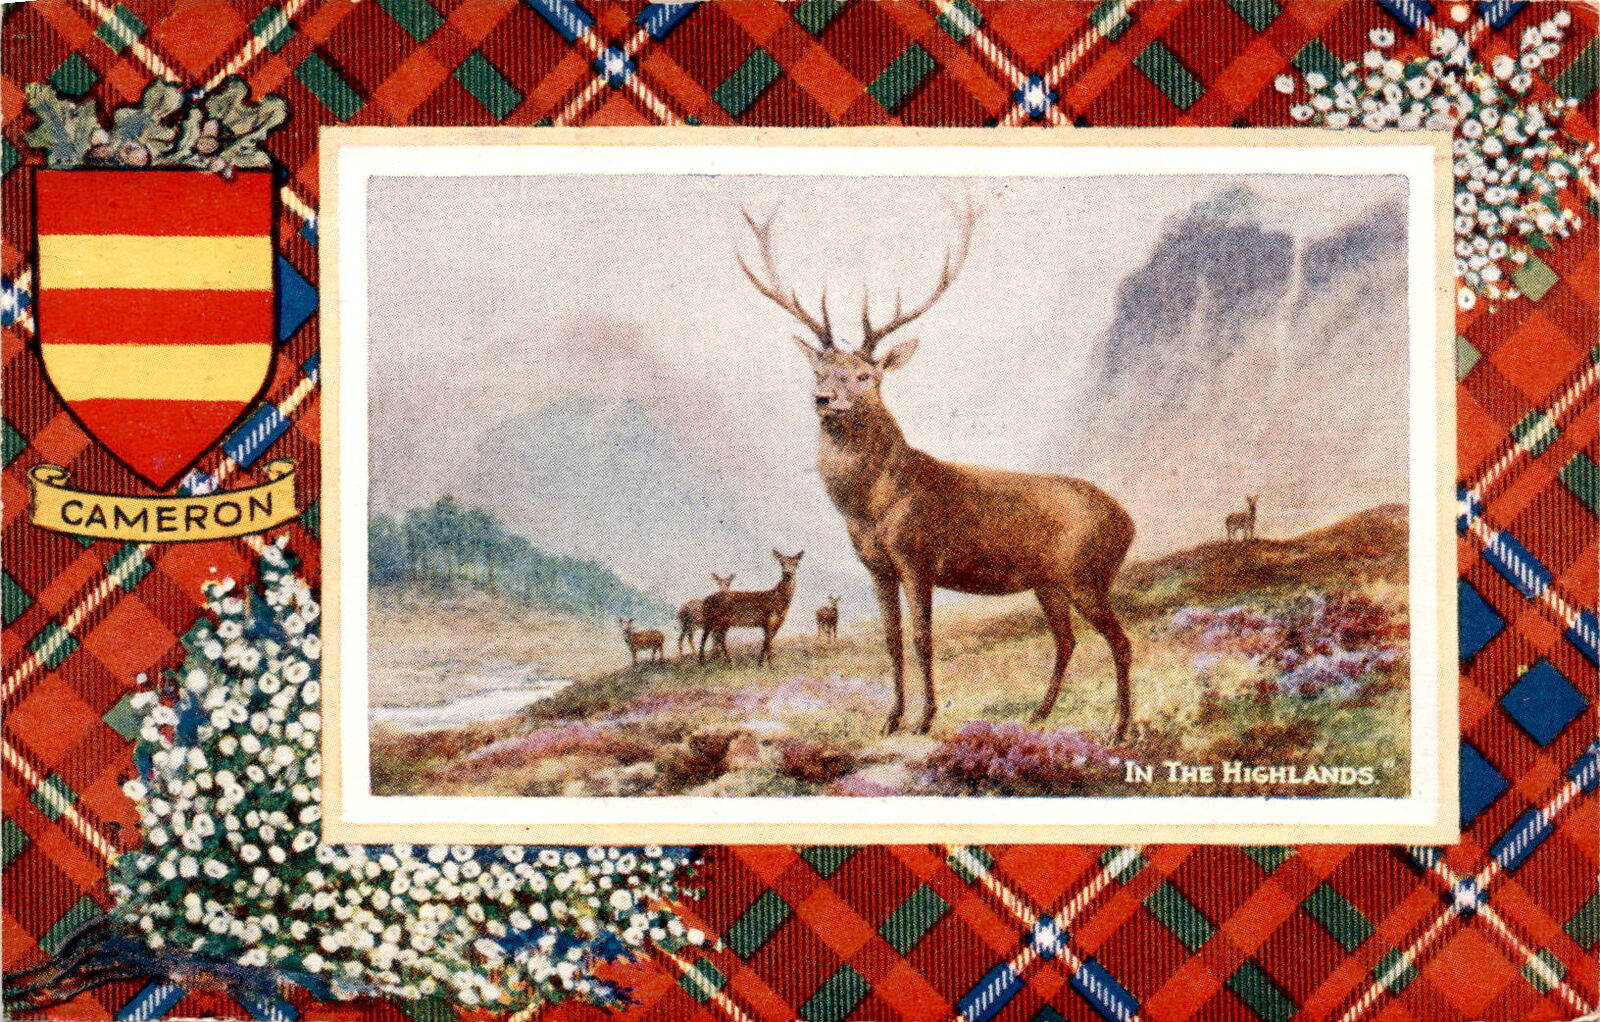 Cameron, Highlands, Clan Crest Series, Valentine & Sons, Ltd., Prime Postcard